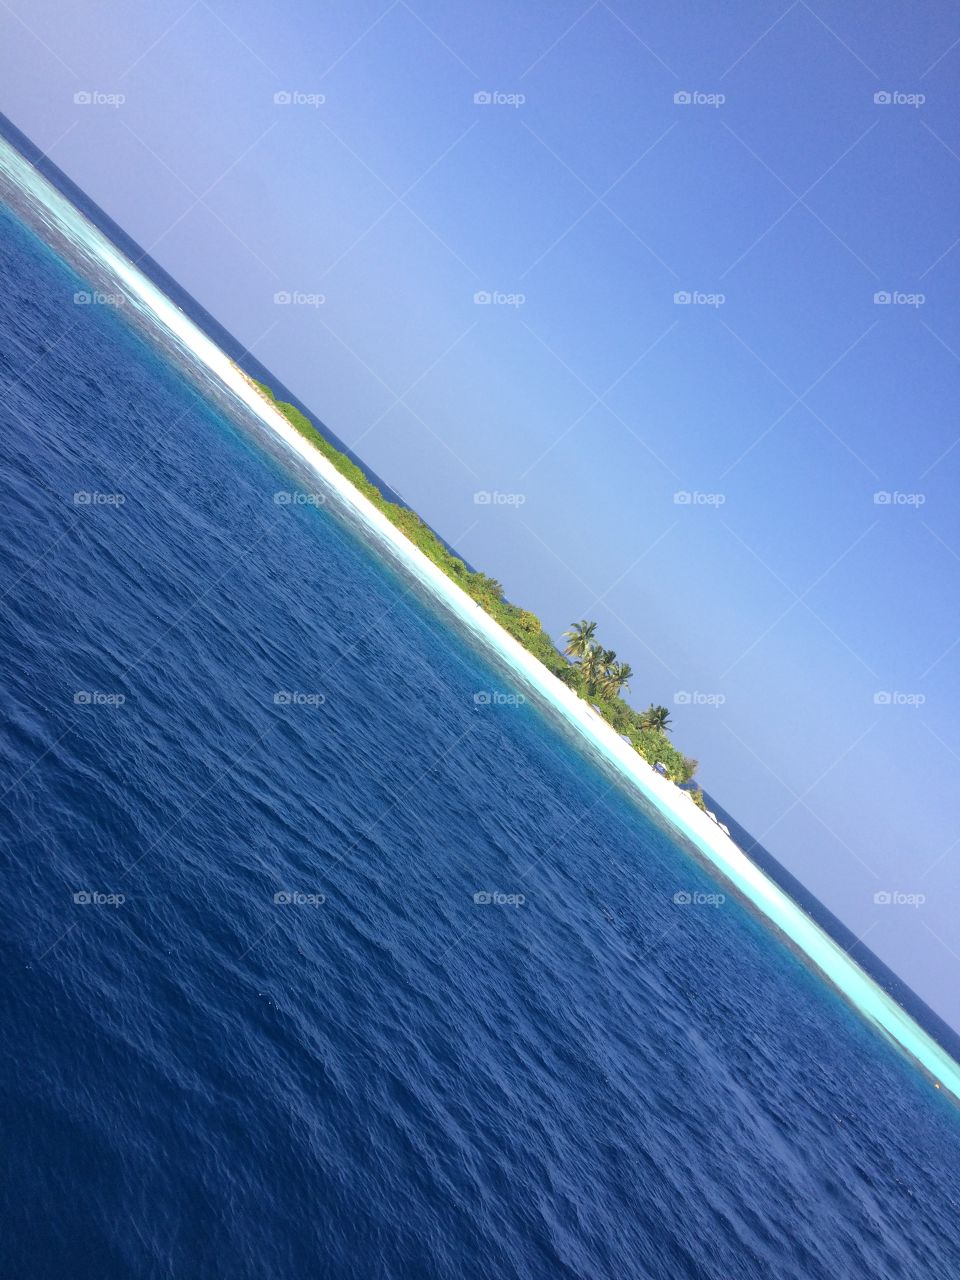 An Island in the Maldives #sun #holiday #maldives #sea #water #sand #palmtree #island #tropic